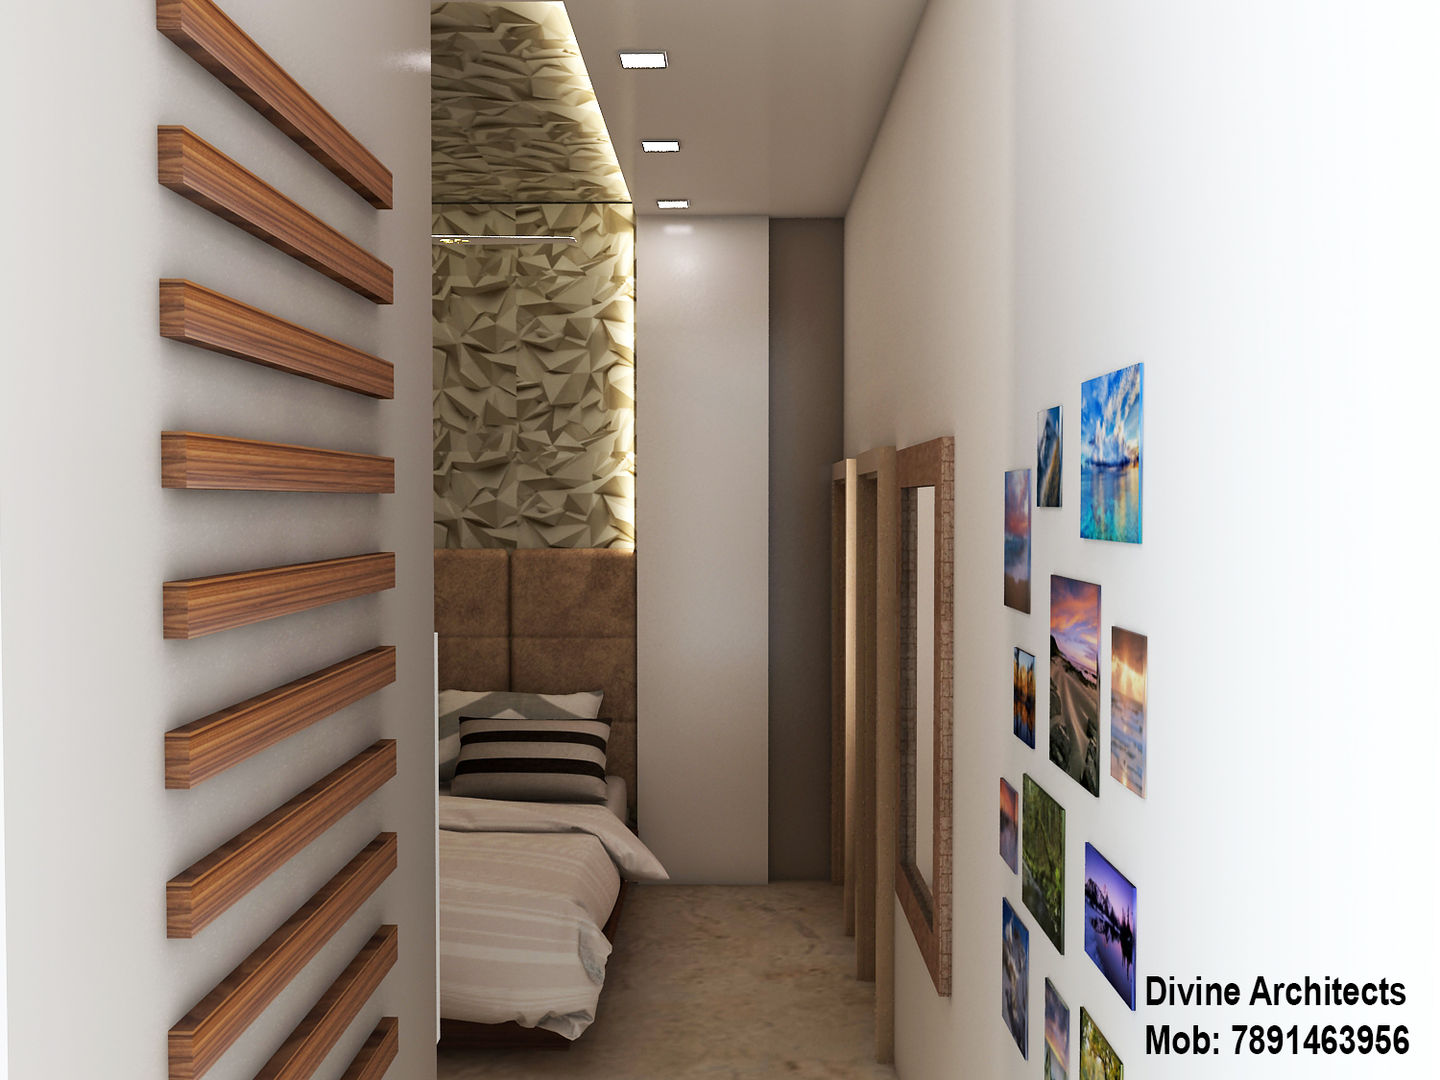 Another bed room interior design for mr. Shyam Gupta Bikaner Rajasthan, divine architects divine architects غرفة نوم